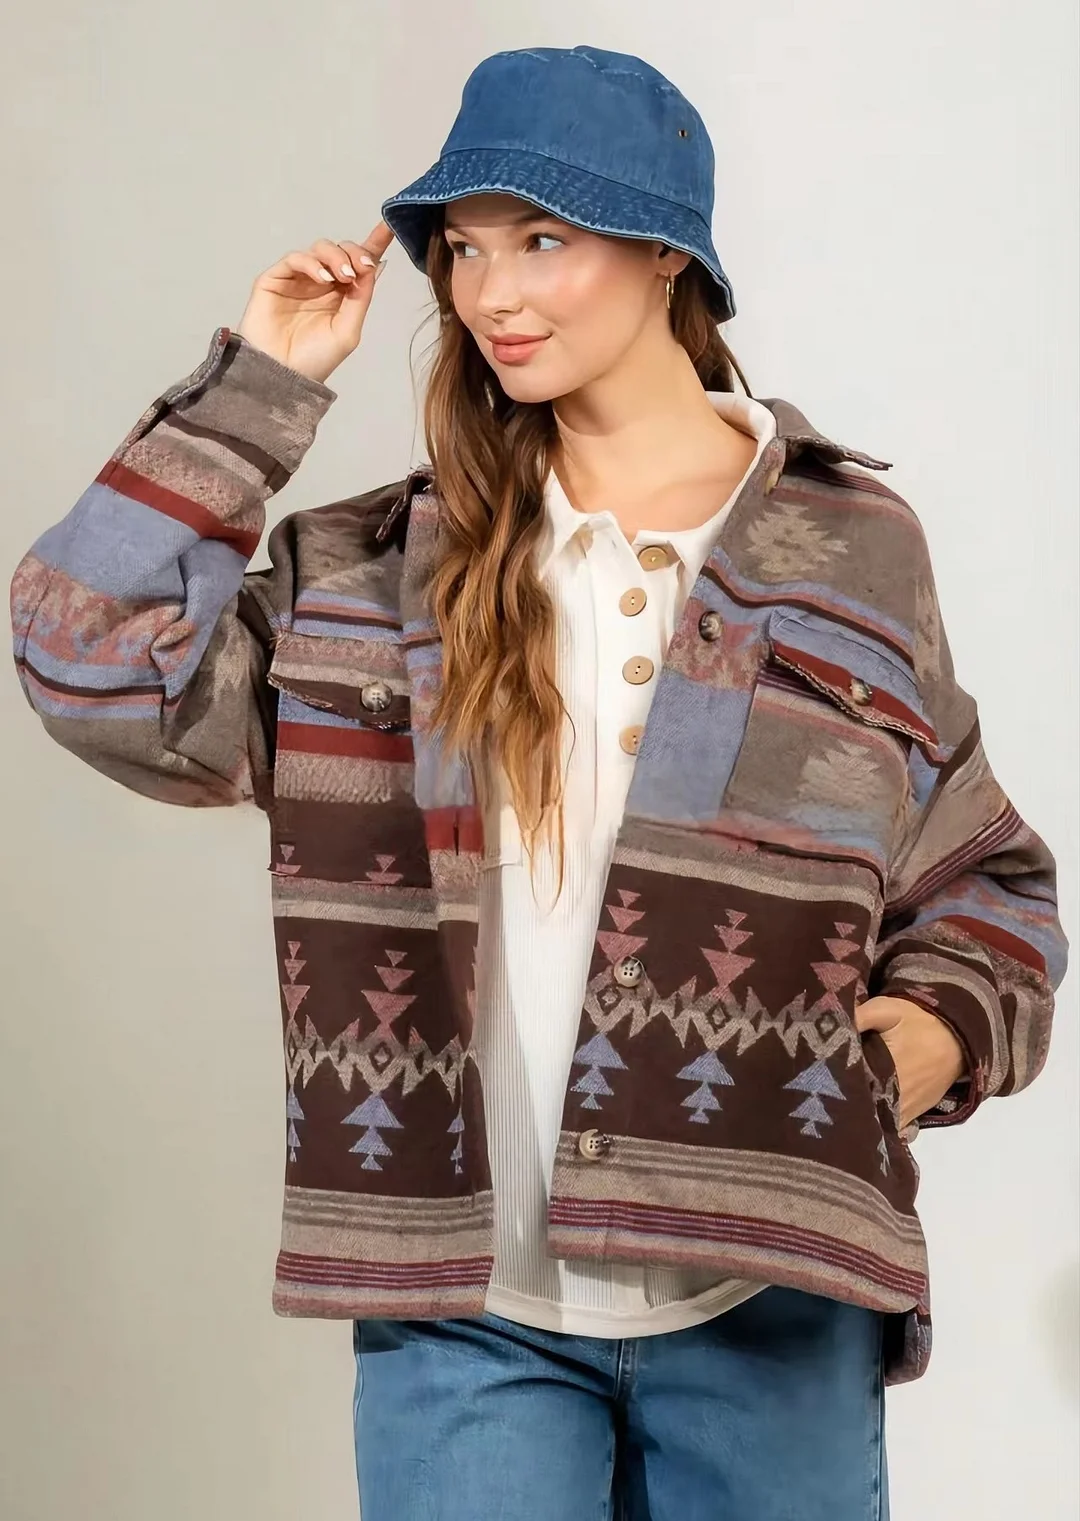 Plus Size Tribal Shift Fleece Coat | IFYHOME